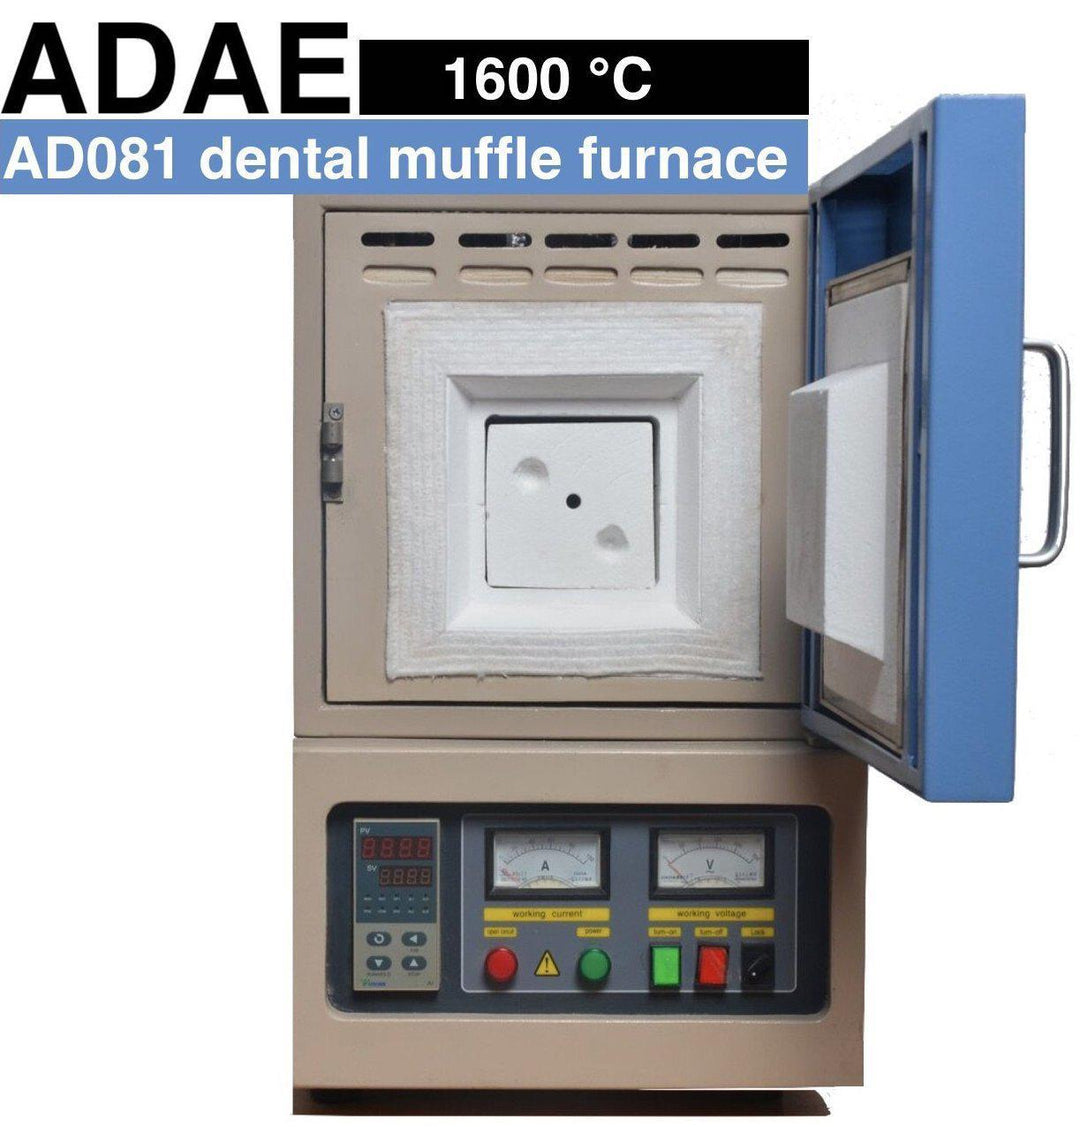 ADAE AD081 muffle furnace 1600 °C - ADAE Dental Online Store